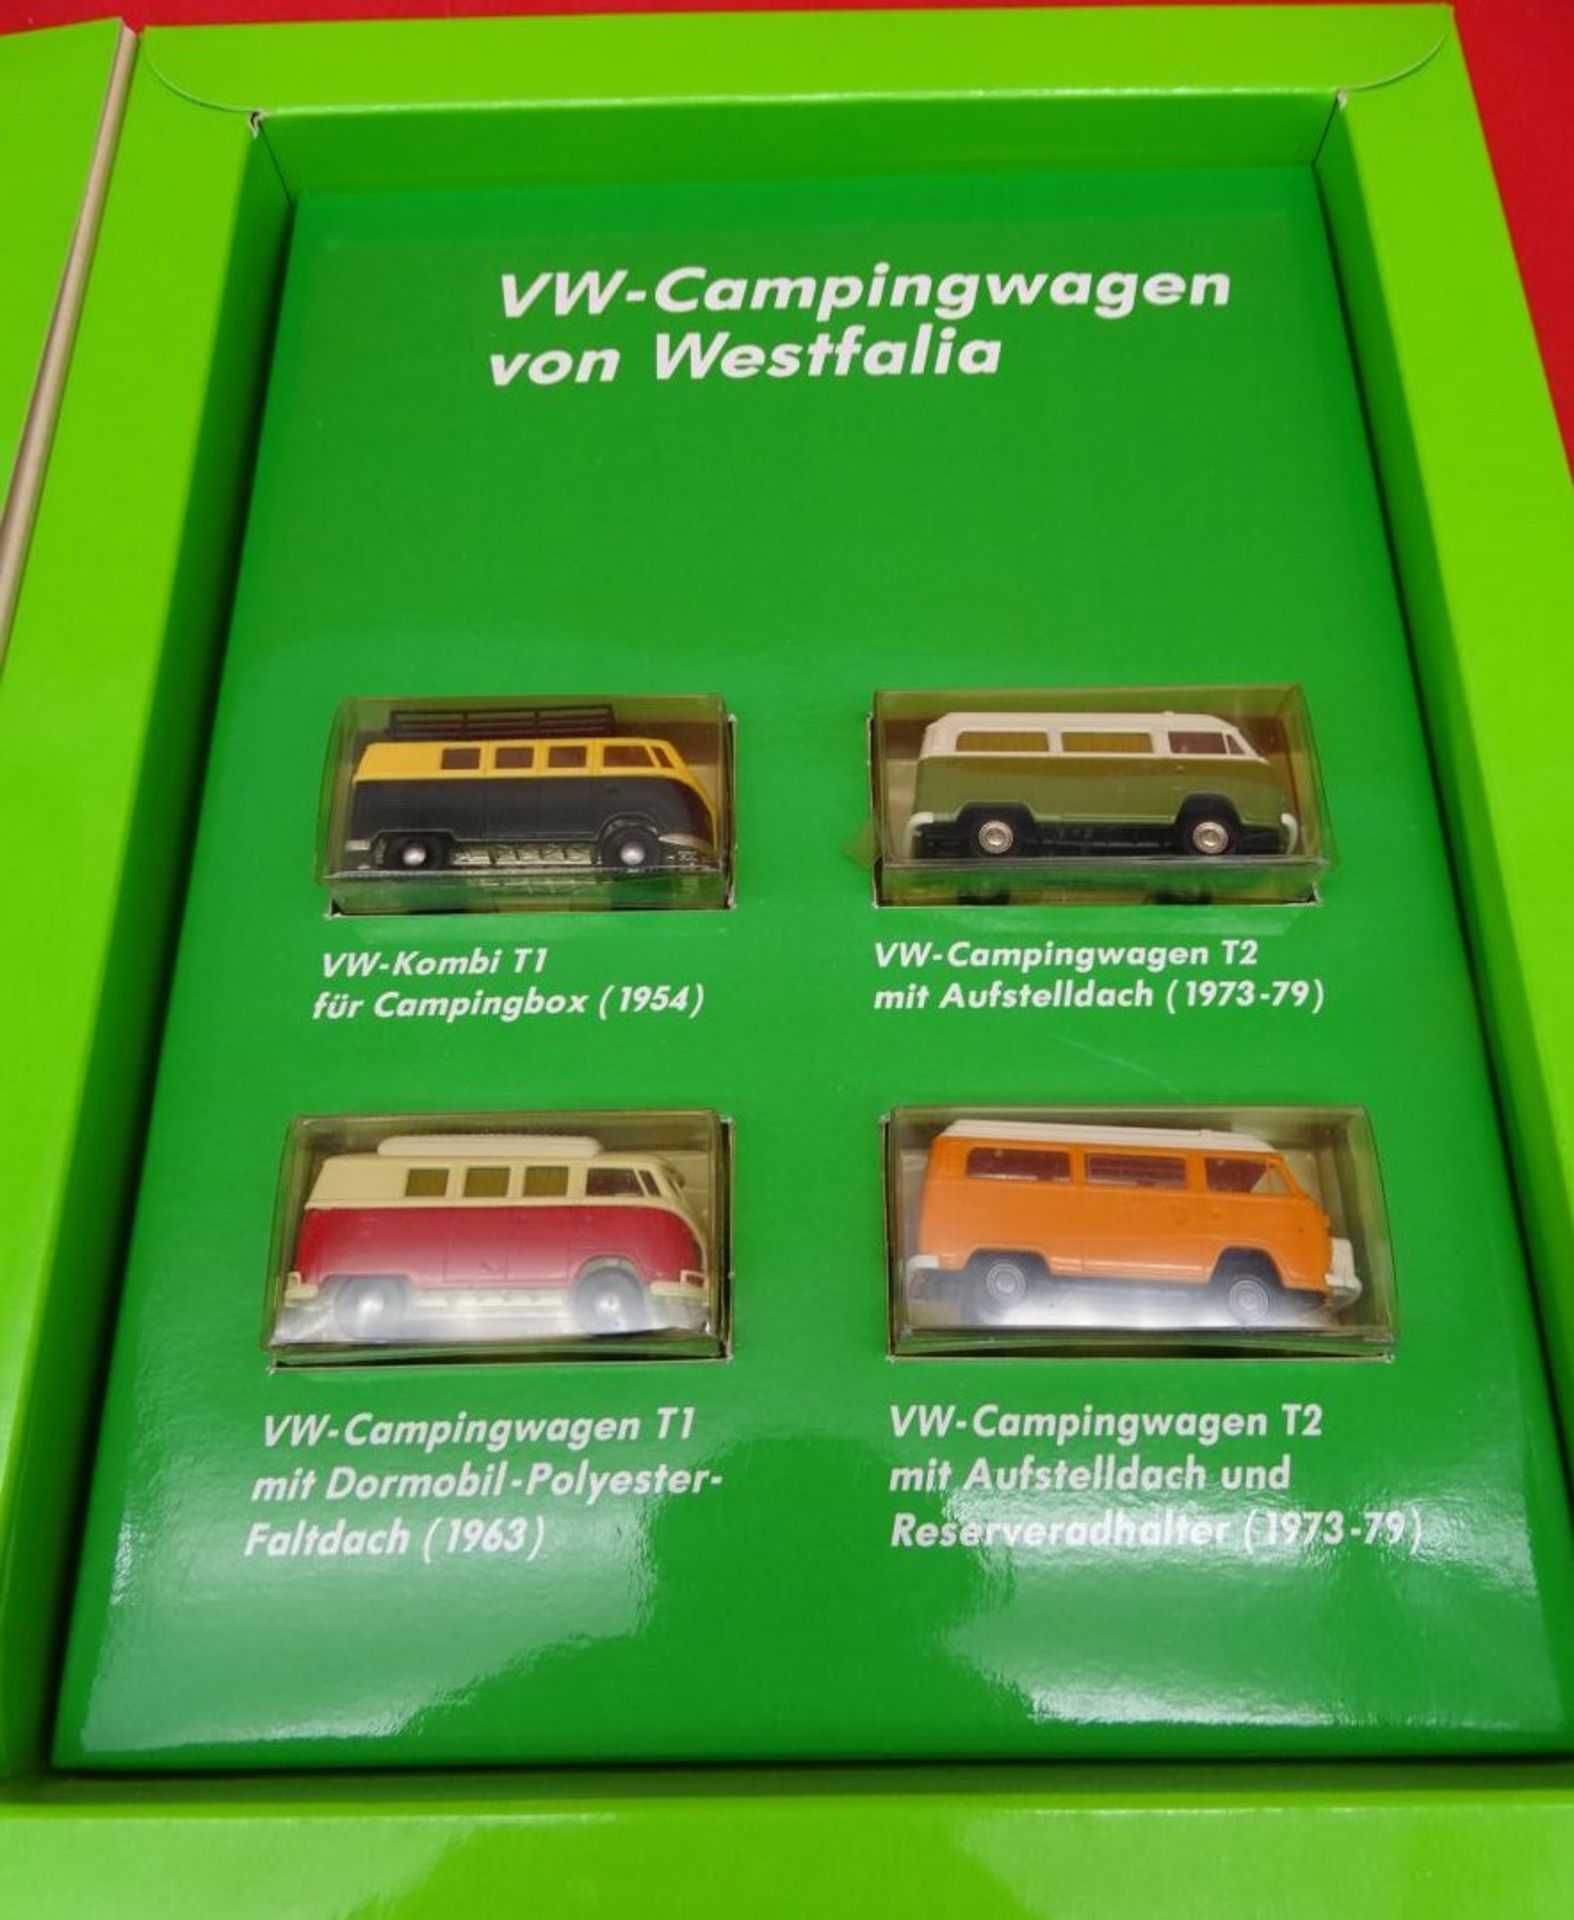 Brekina, 4 VW Campingbusse von Westfalia, ineu n Display, 1:87, H0